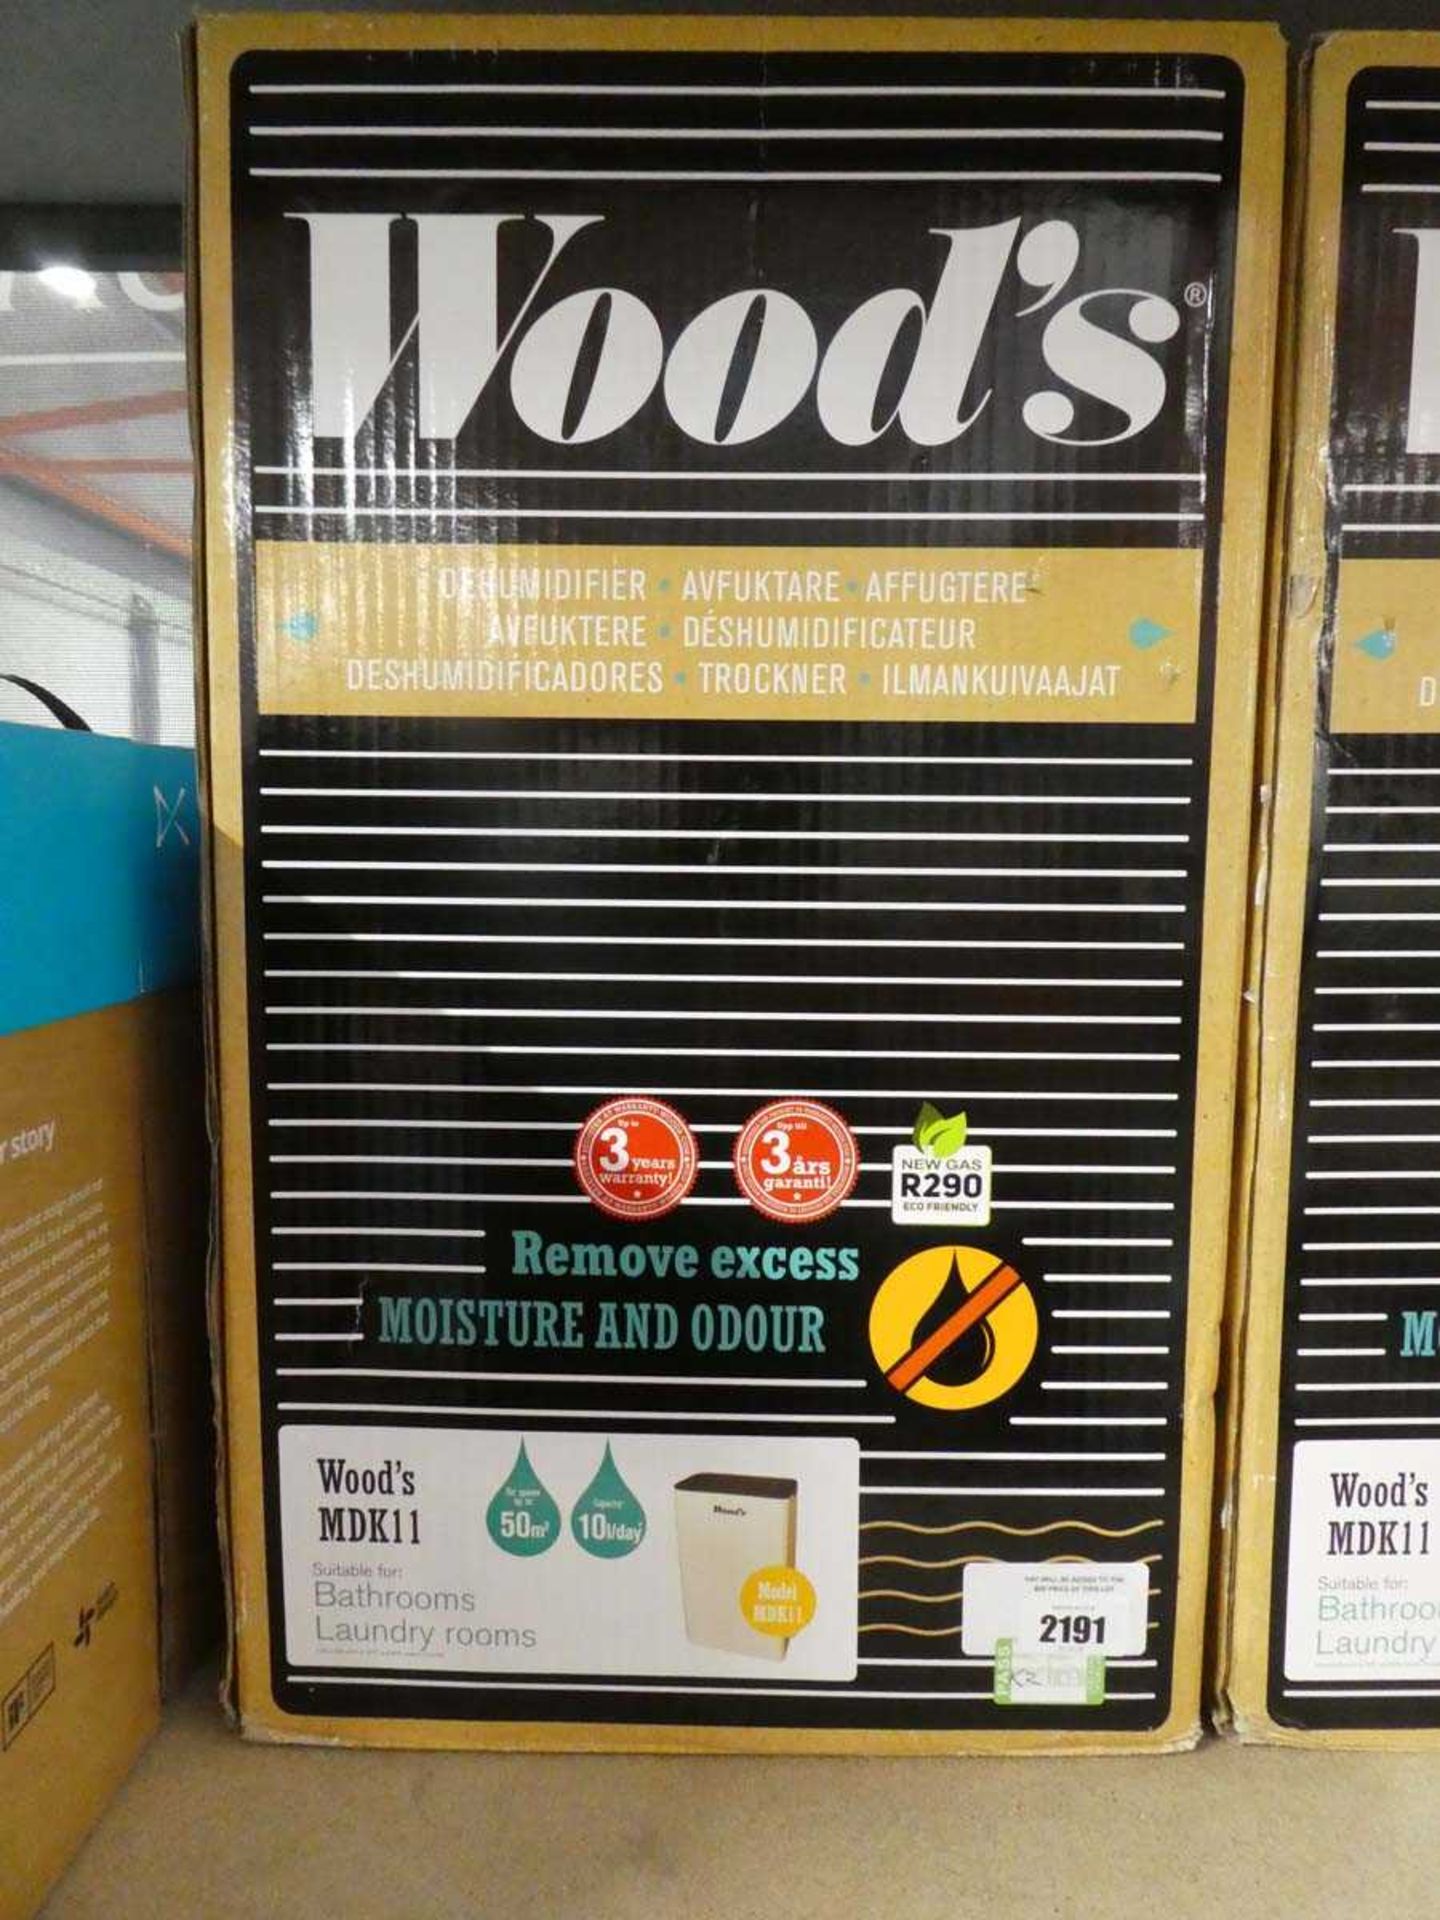 +VAT Boxed Wood's MDK21 20L electric dehumidifier